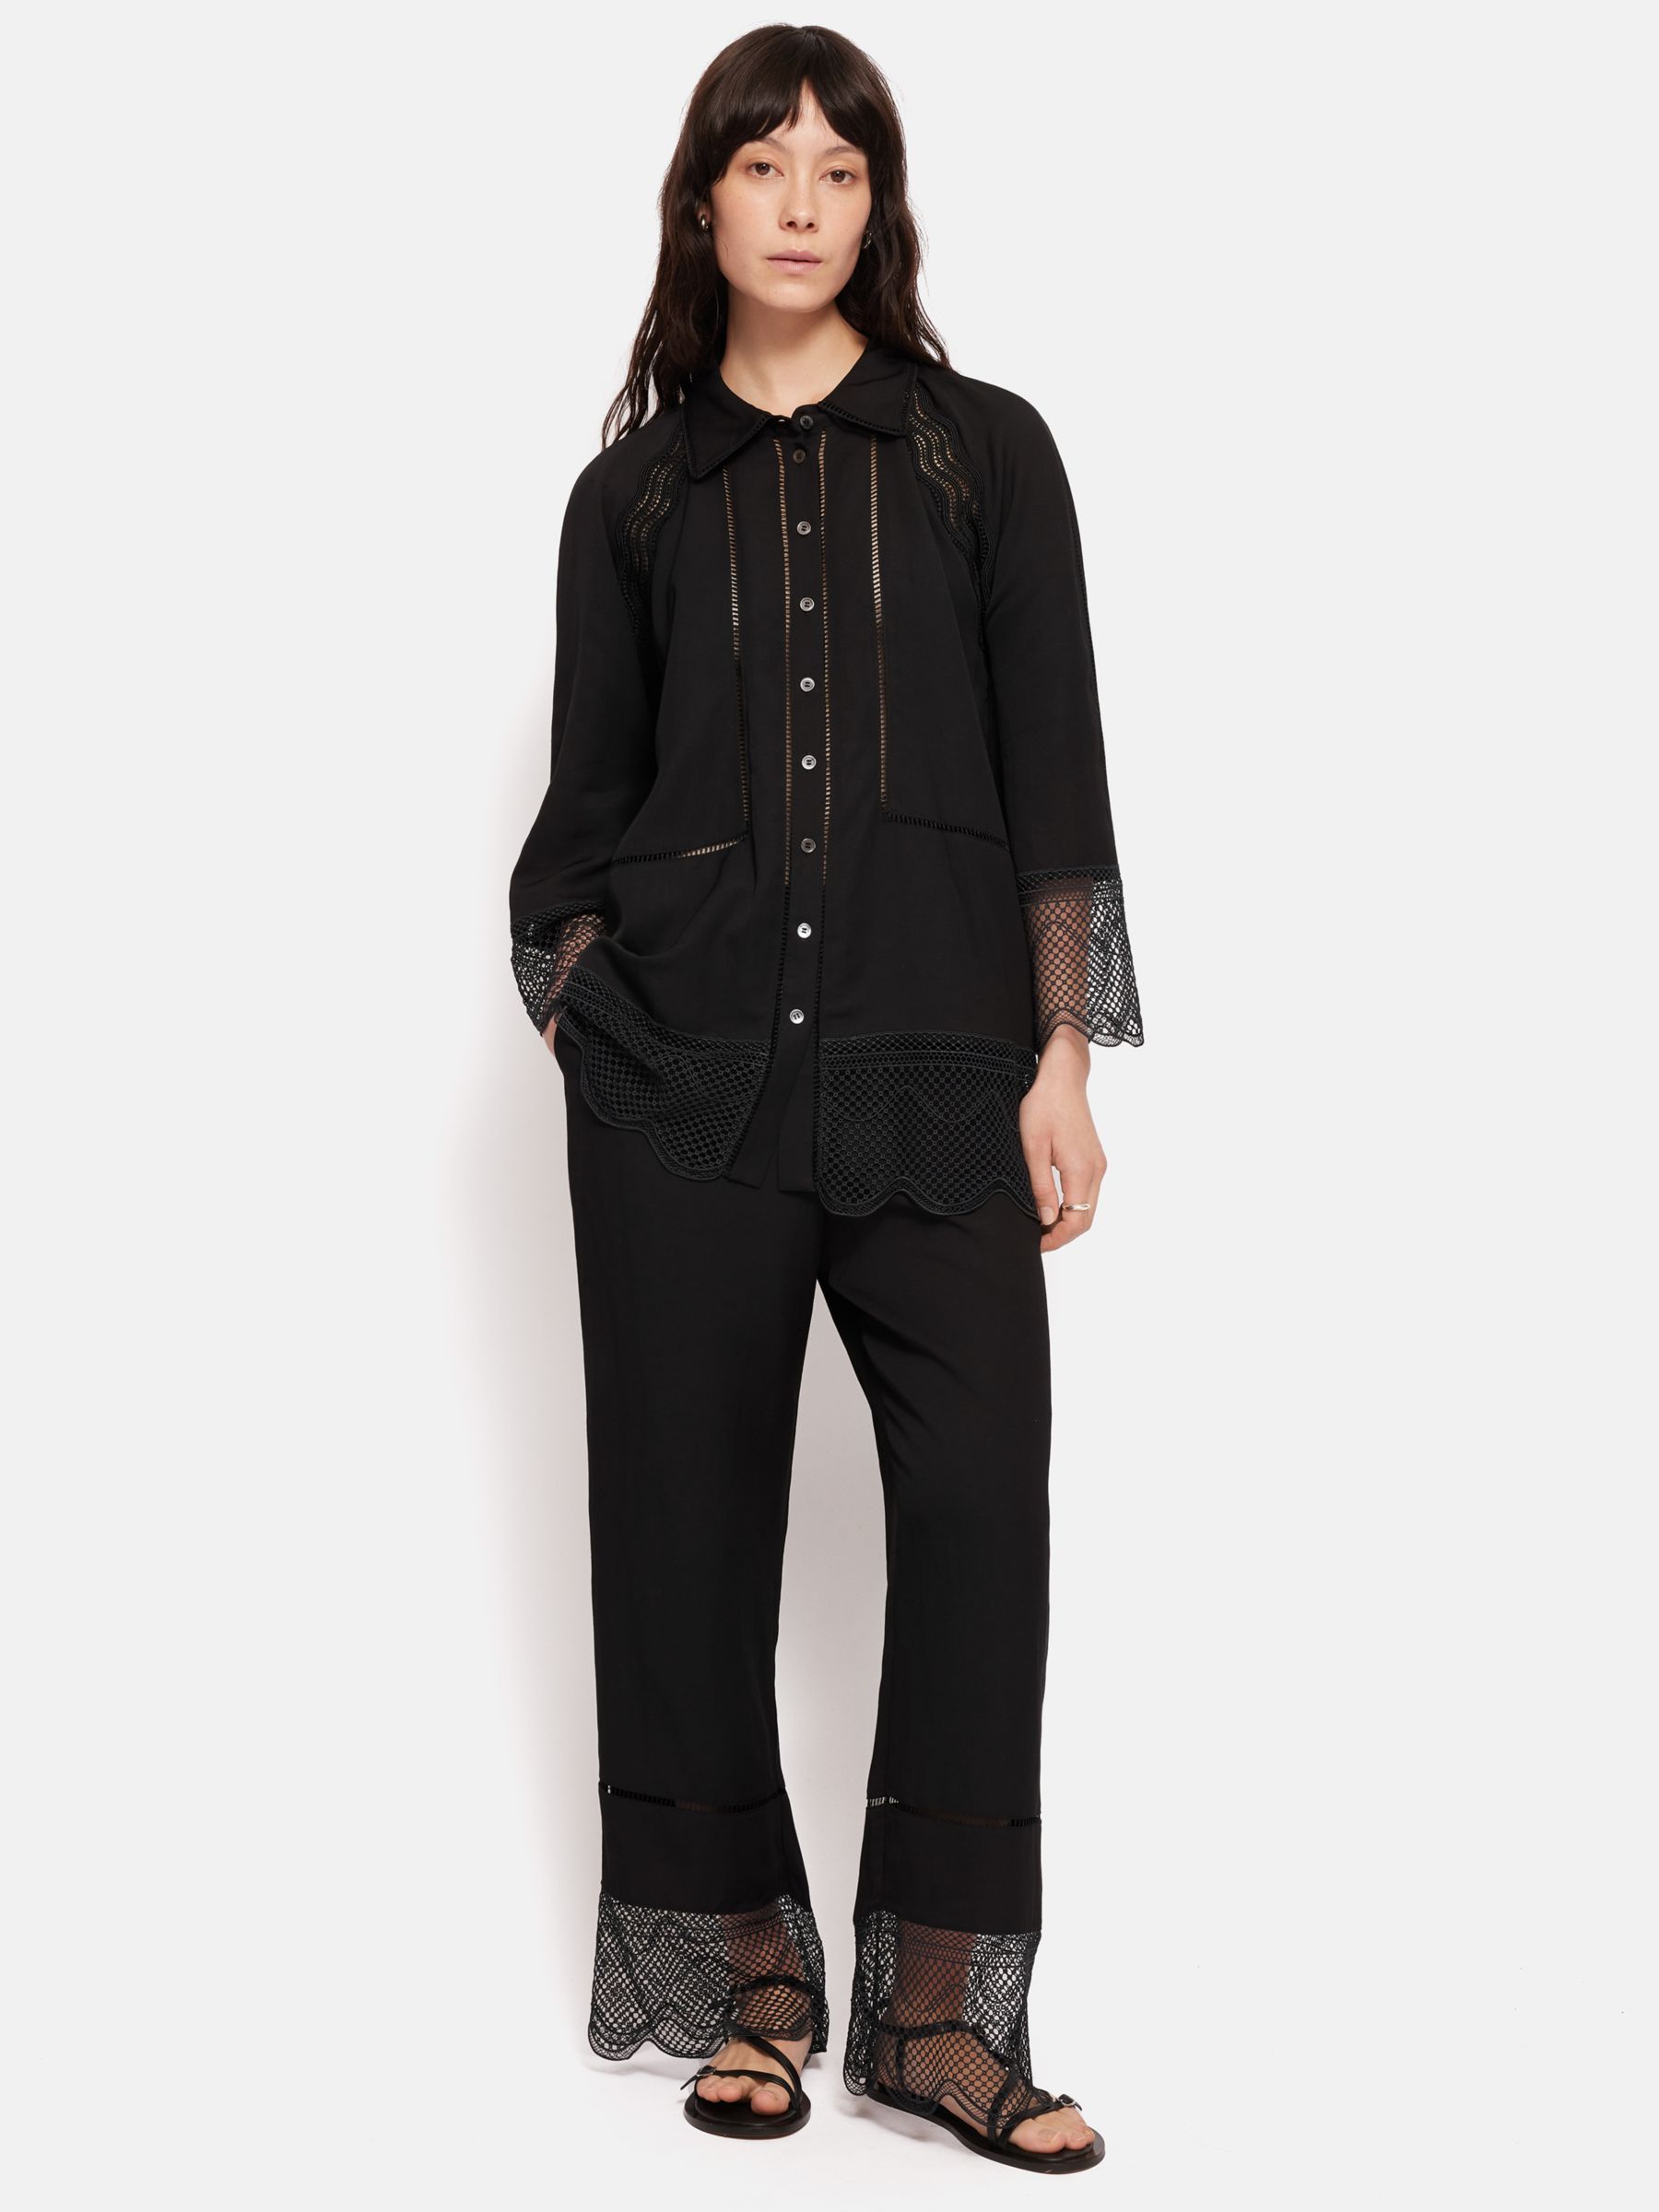 Jigsaw Scallop Lace Trim Shirt, Black, 6